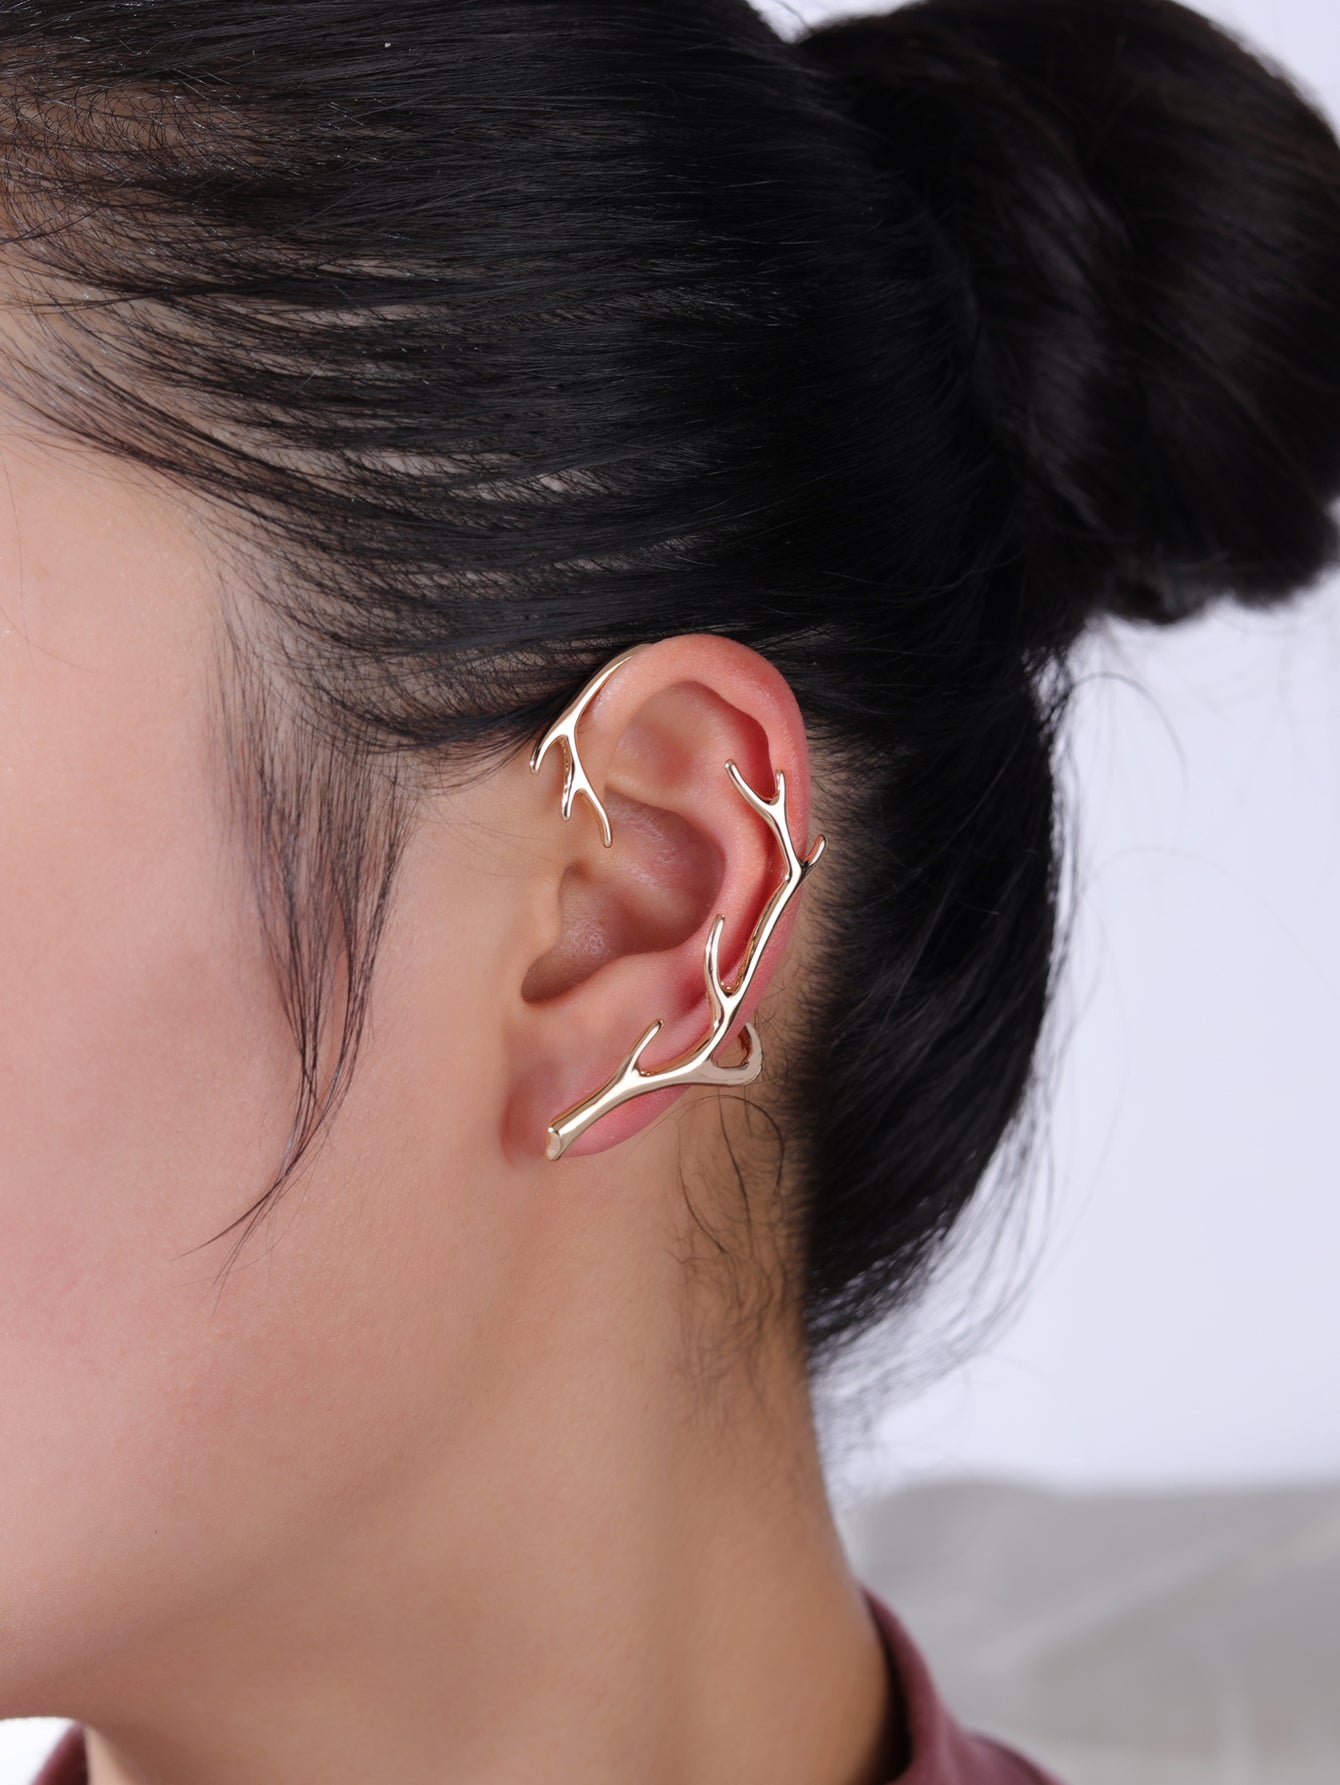 No-ear Hole Elf Earrings